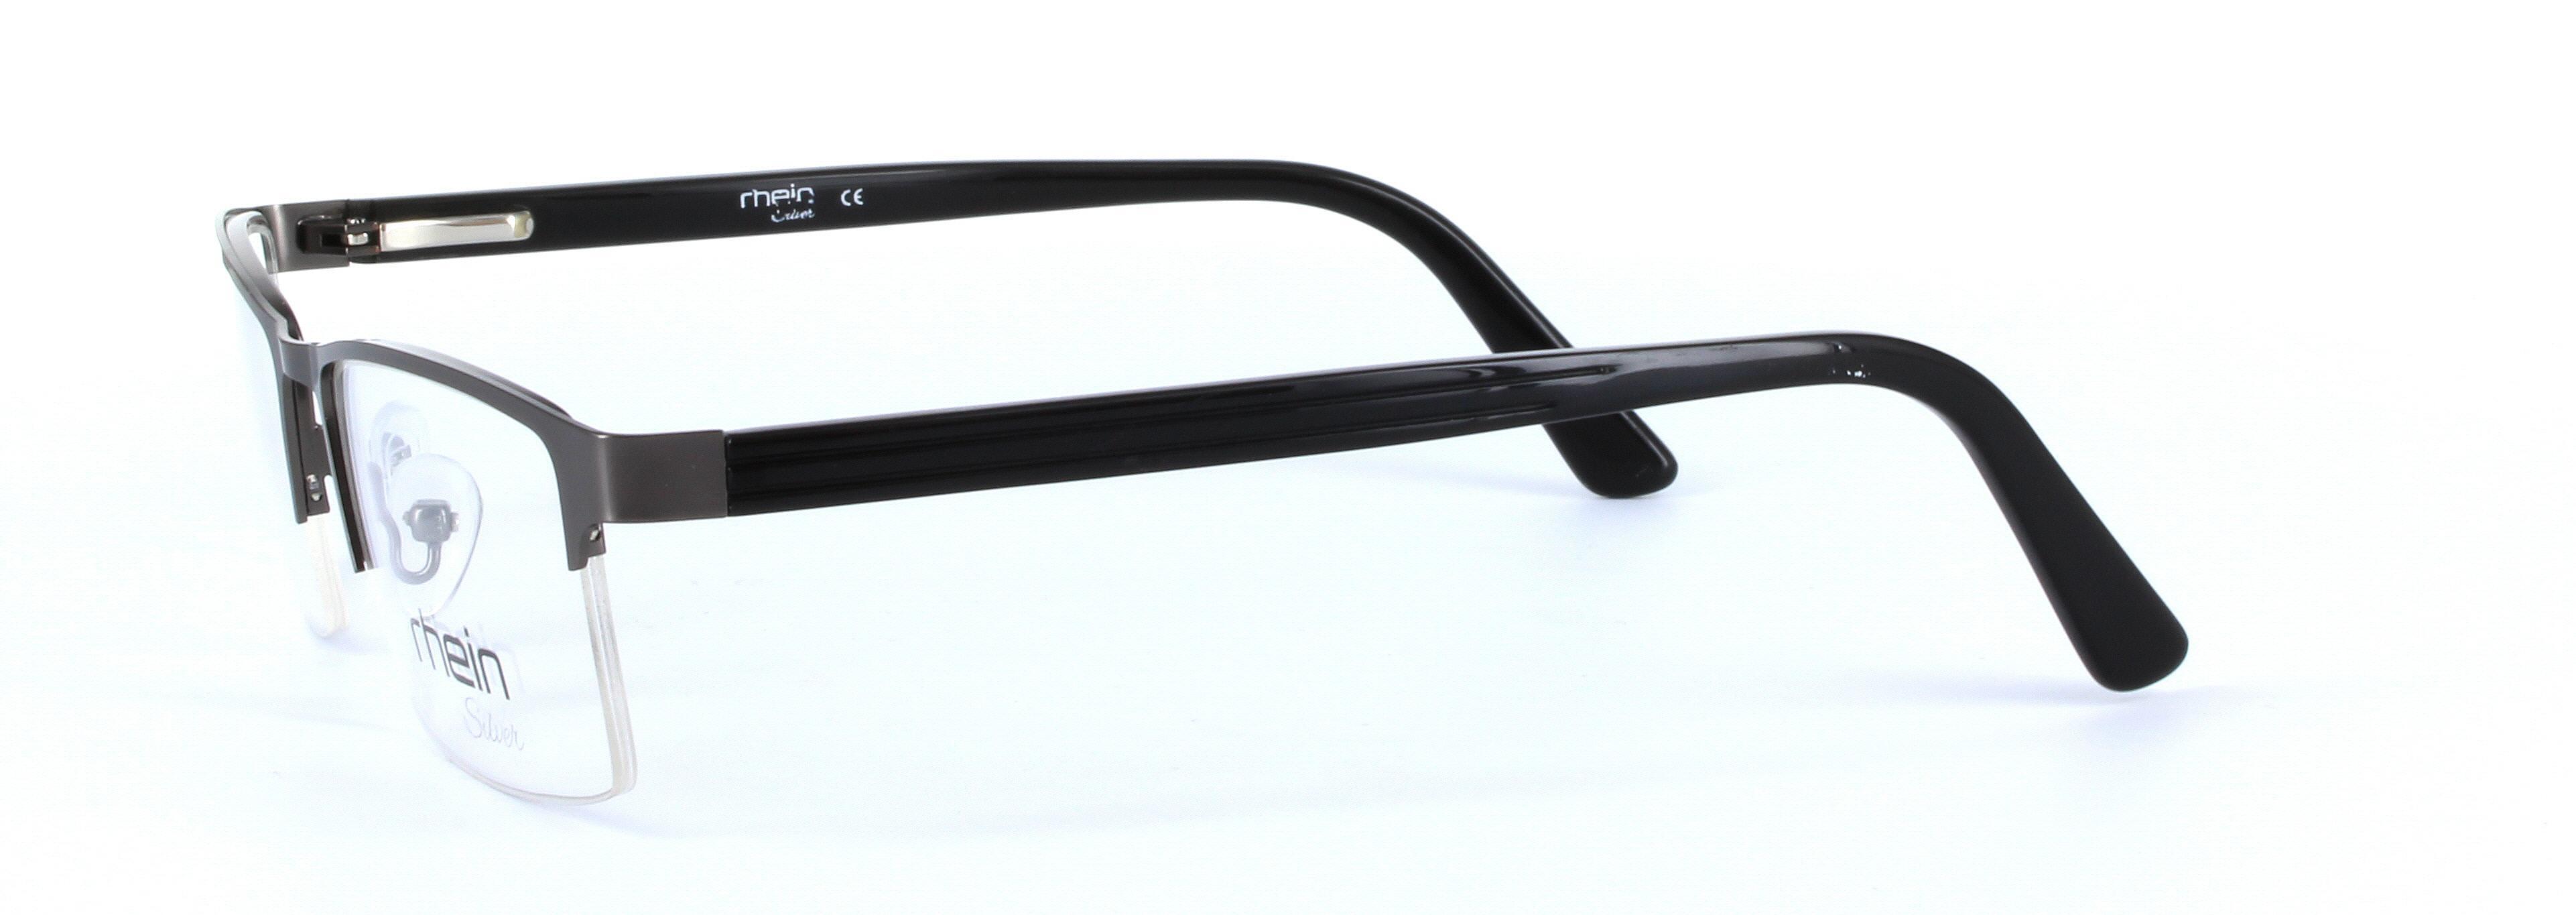 Leo Blue Semi Rimless Rectangular Metal Glasses - Image View 2